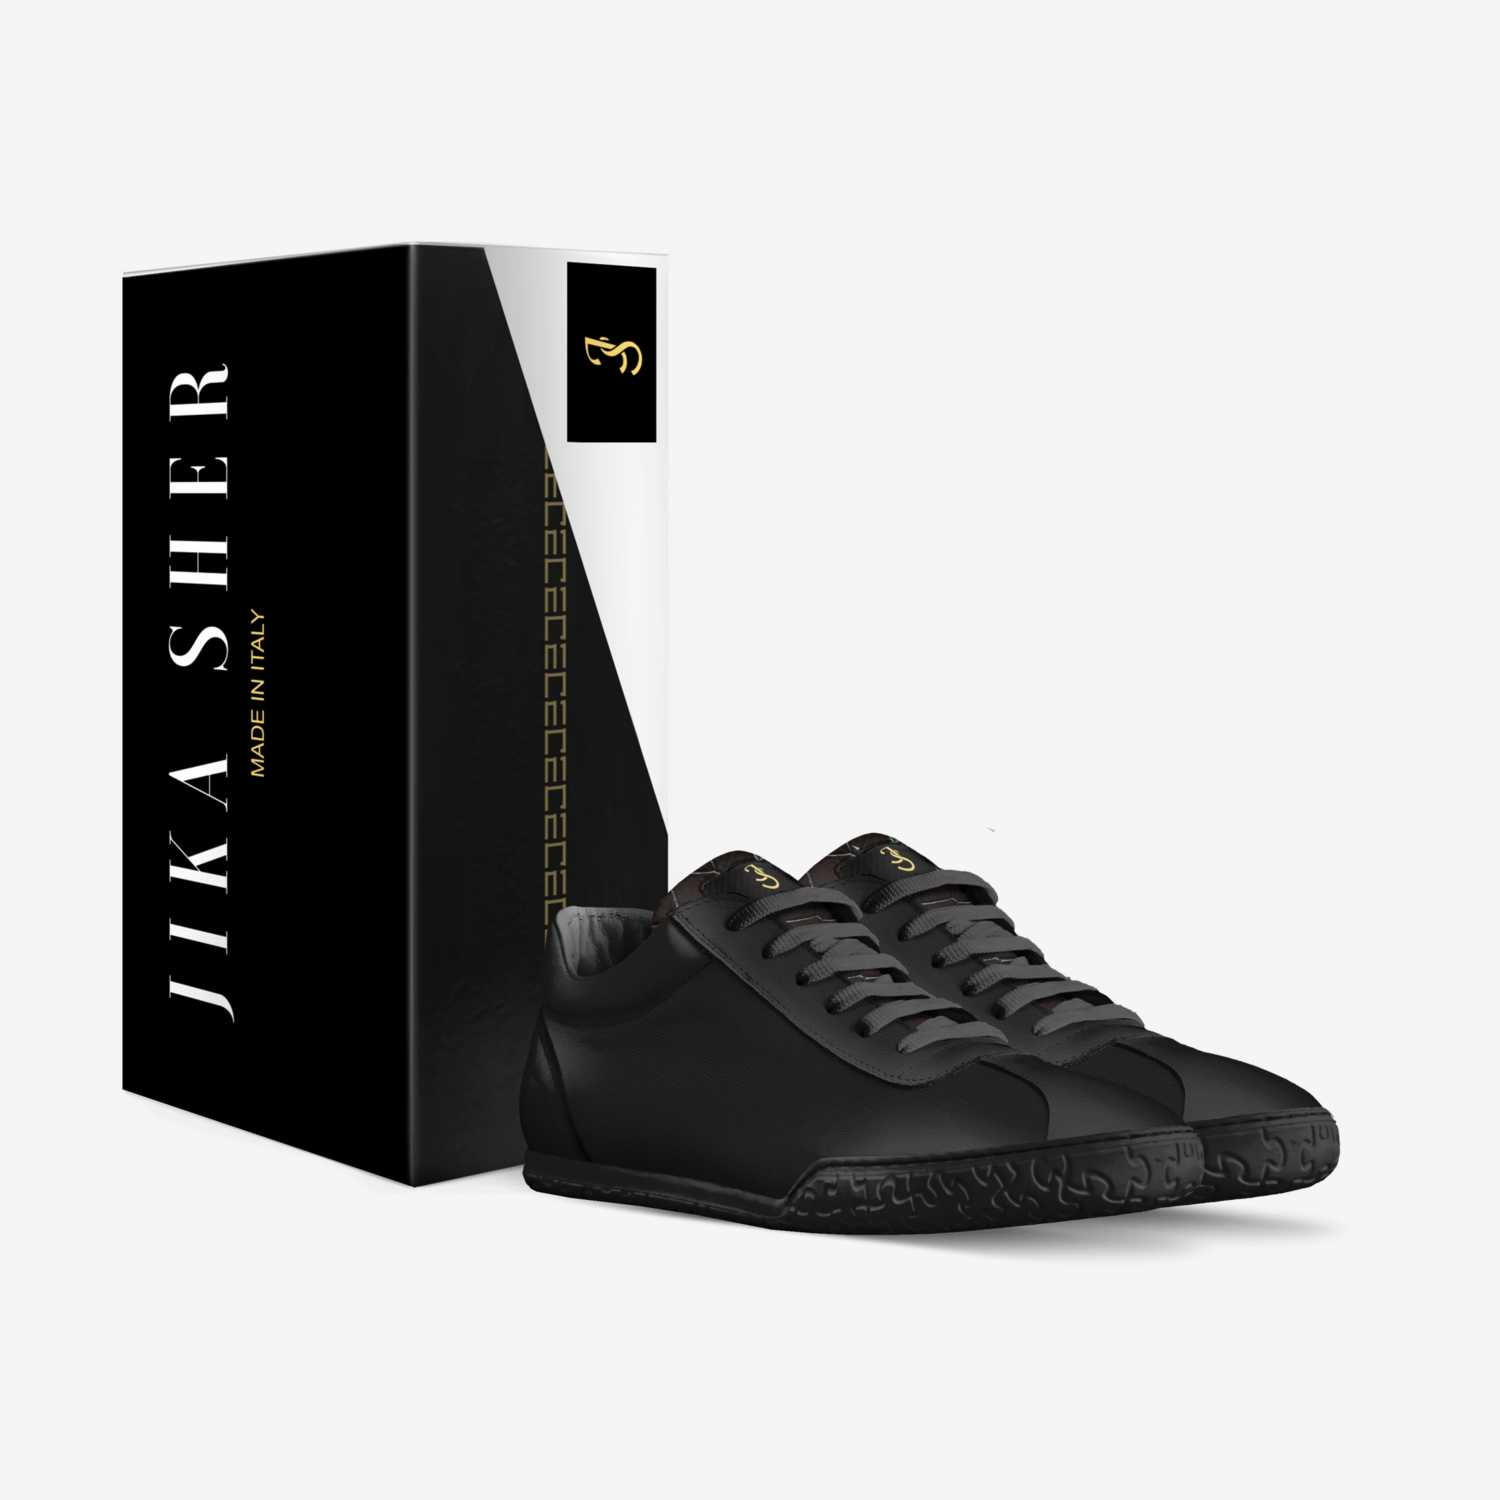 JIKA SHER custom made in Italy shoes by Jyldyz Sheralieva | Box view